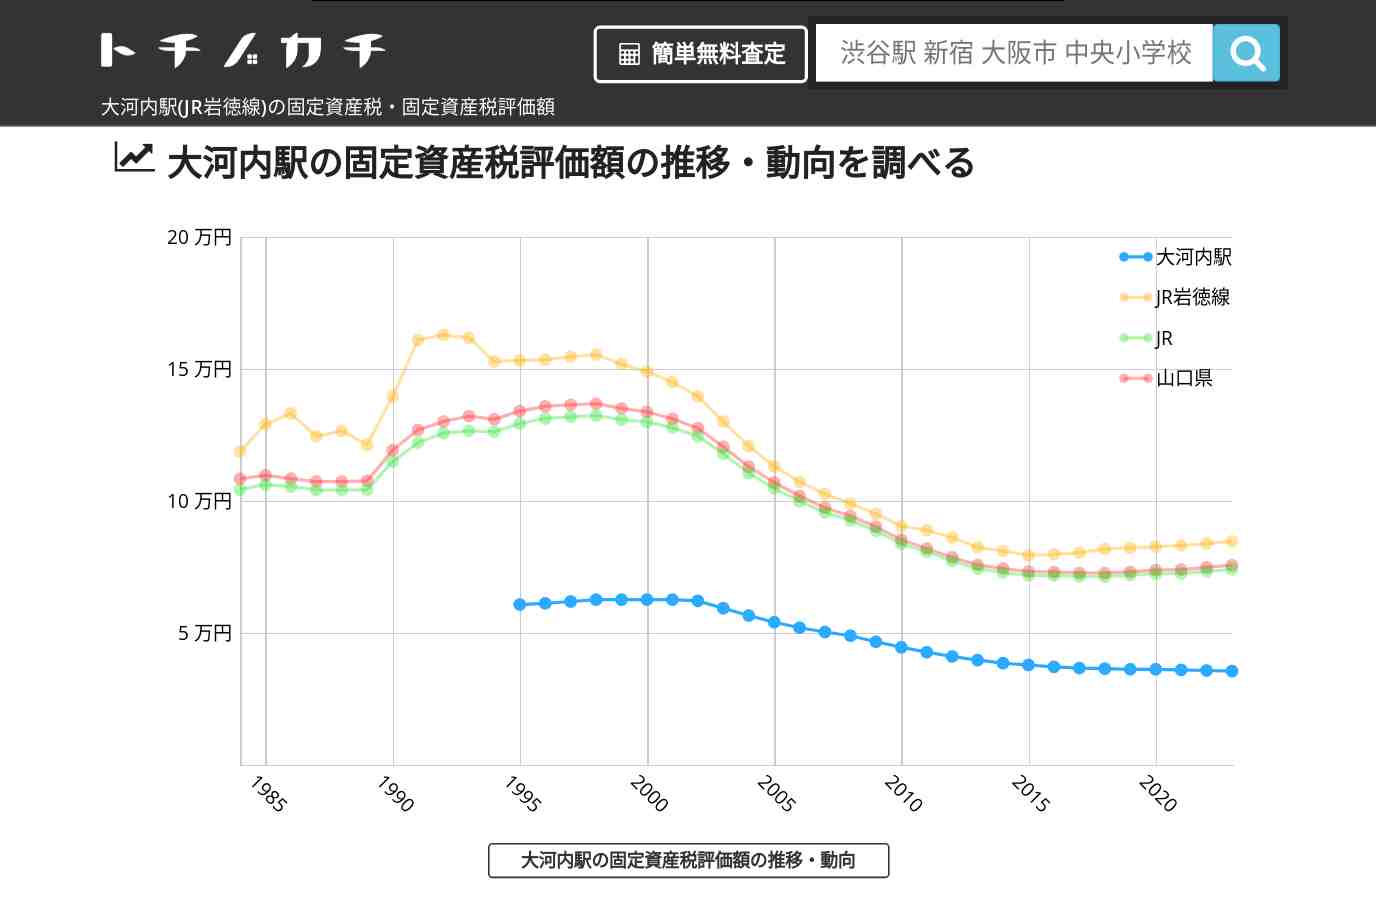 大河内駅(JR岩徳線)の固定資産税・固定資産税評価額 | トチノカチ